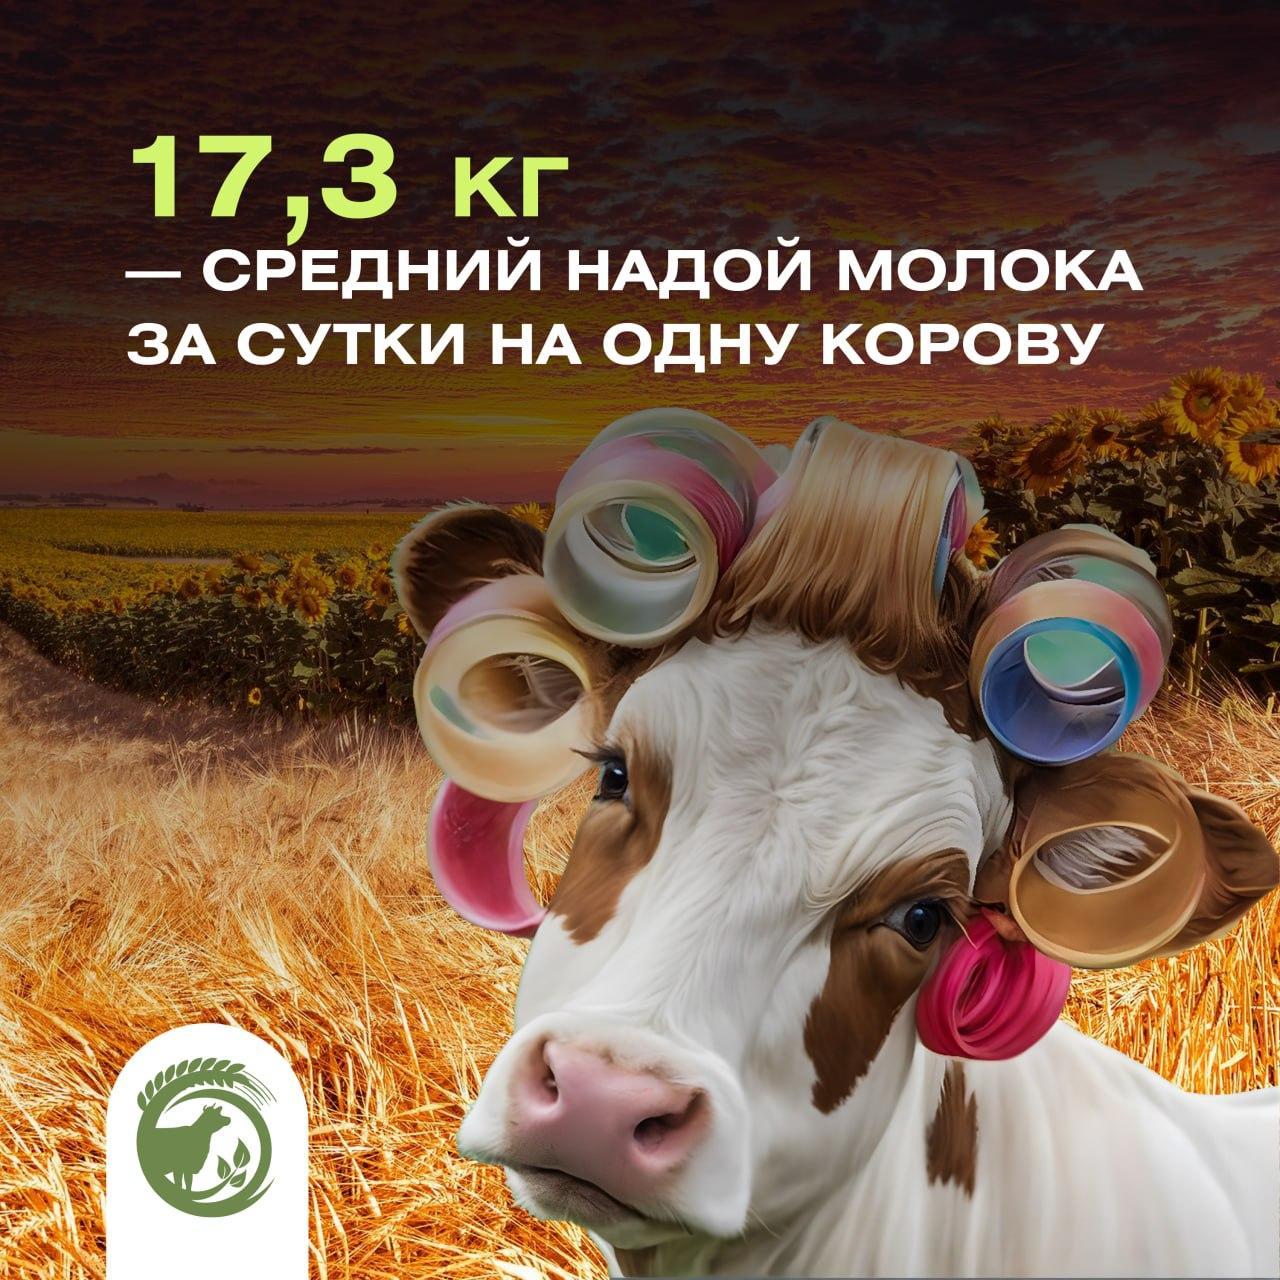 Средний надой молока за сутки на одну корову составил.